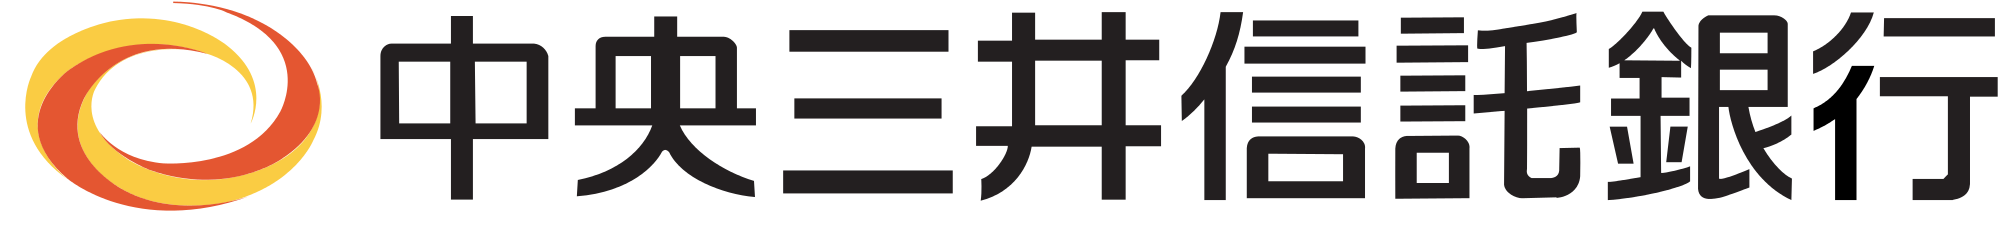 Sumitomo Mitsui Trust Holdings Brand Logo